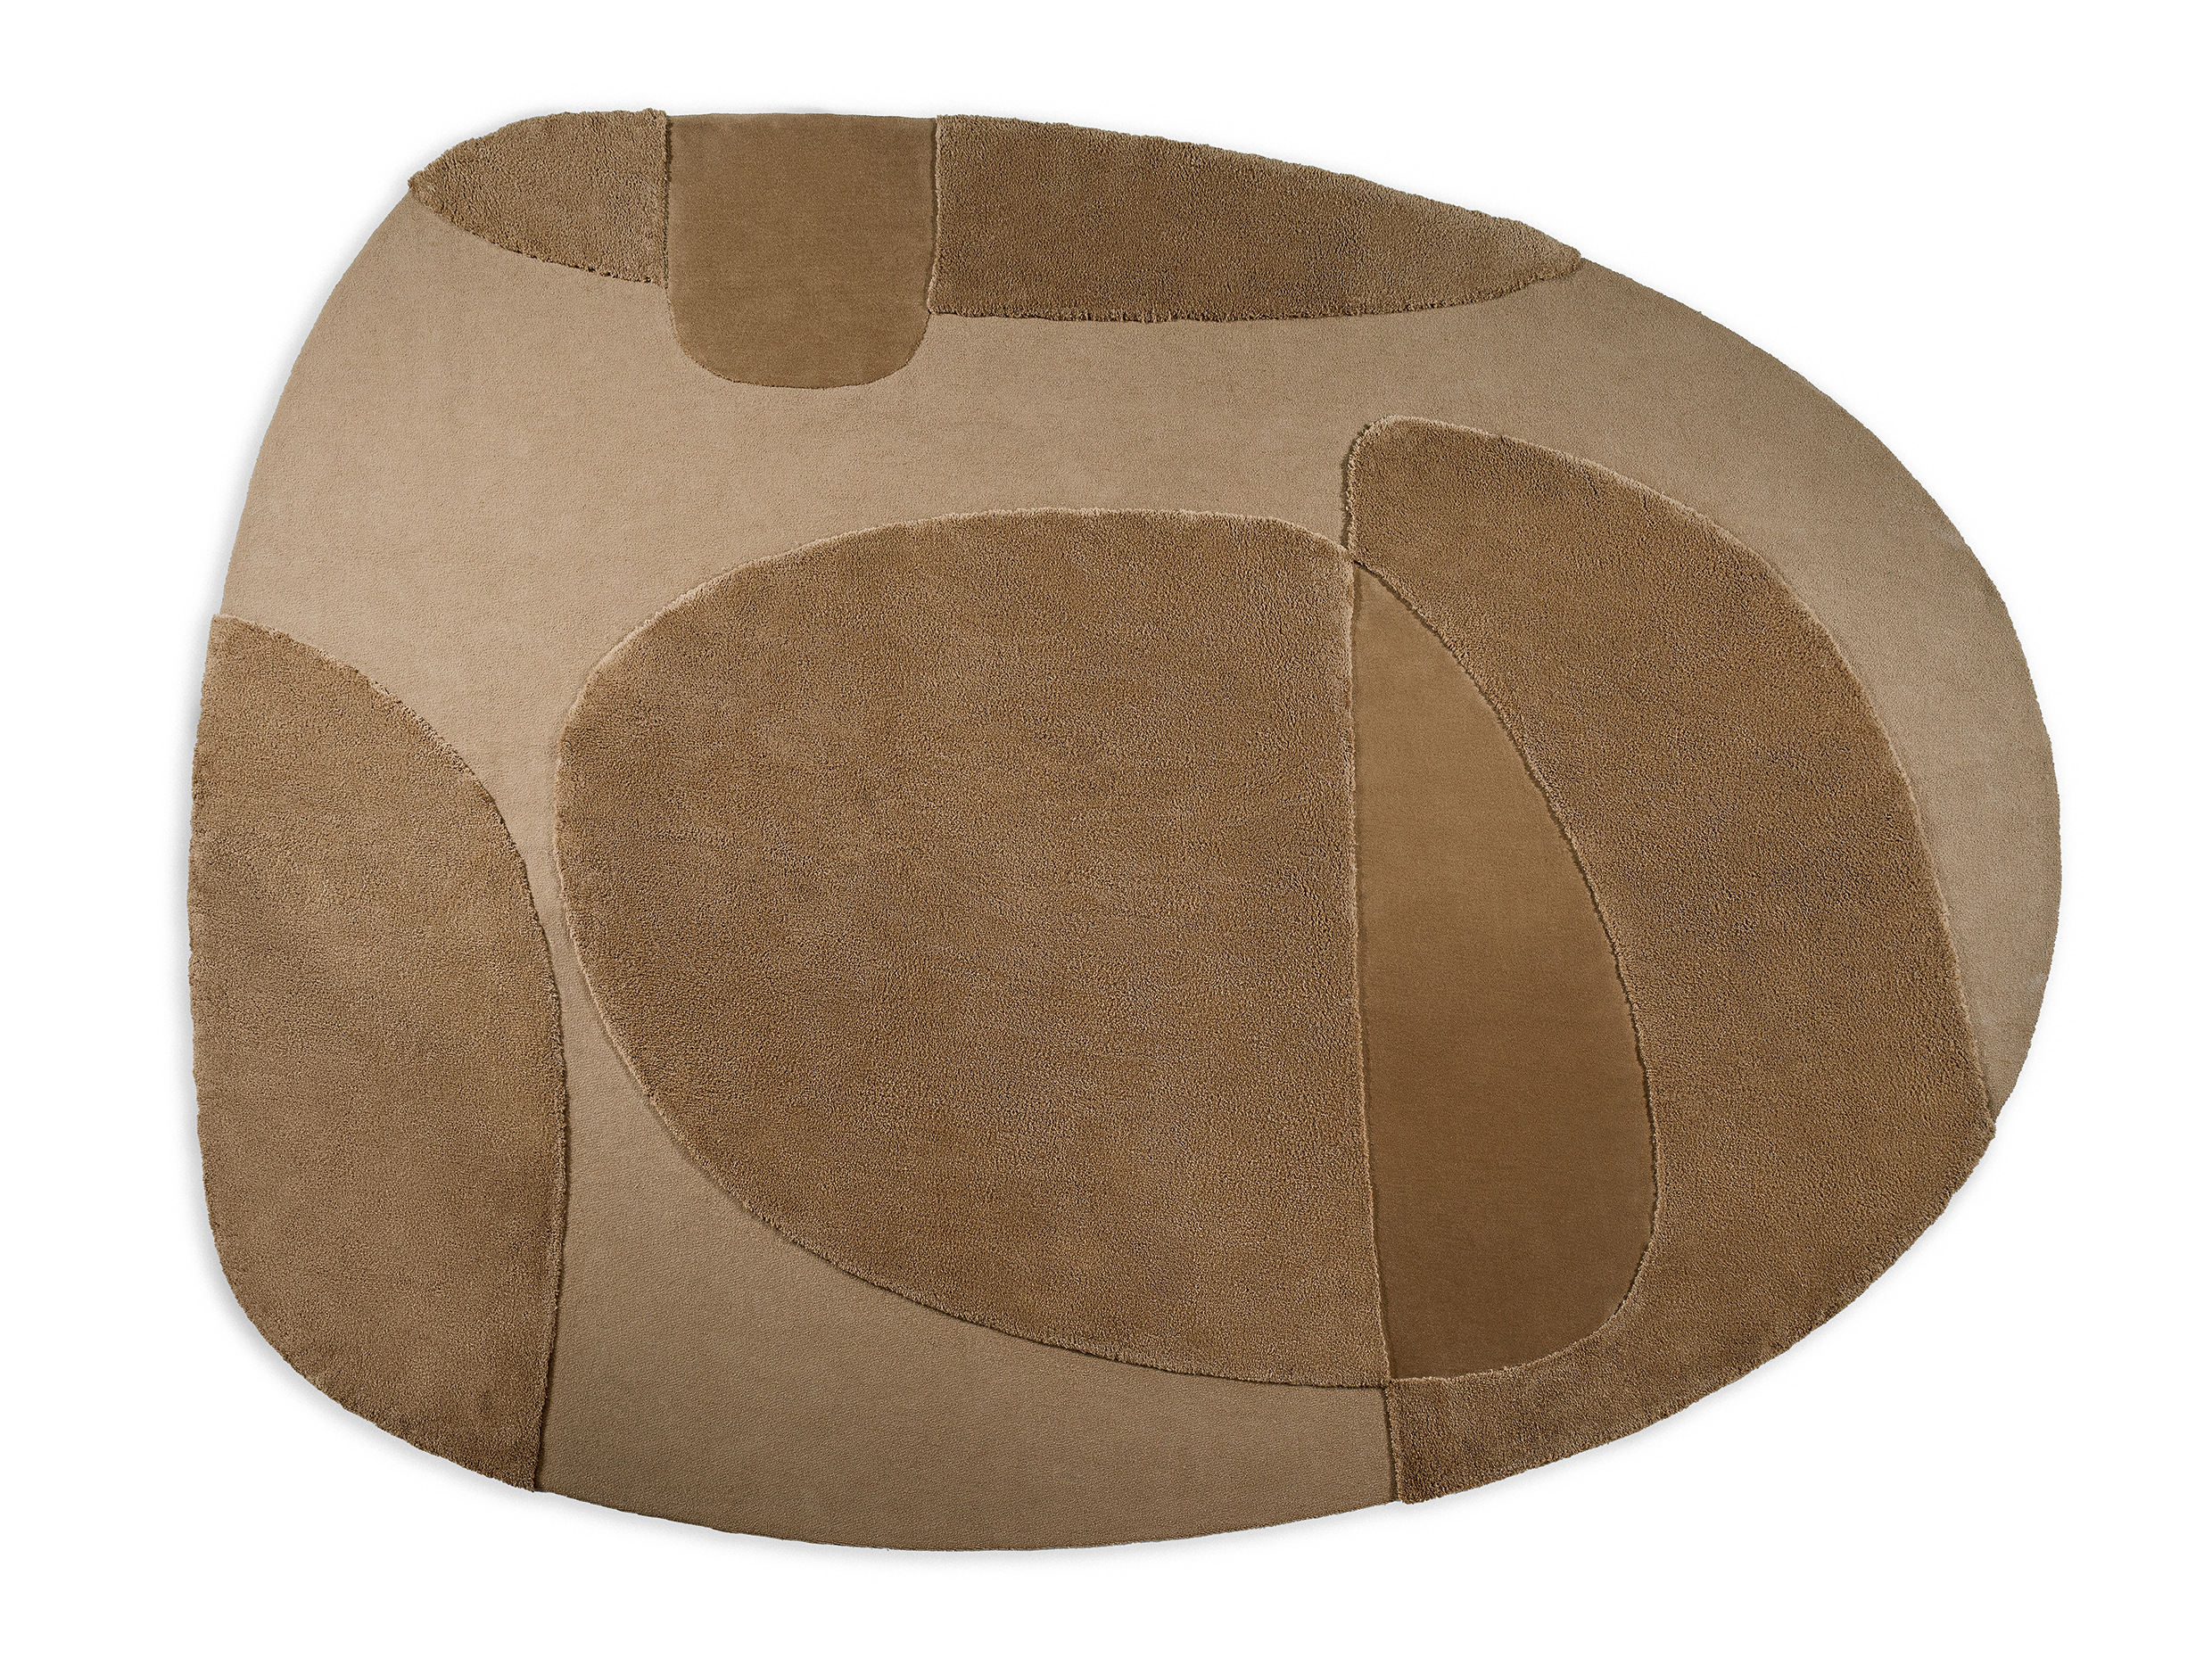 Milan design Week Gallotti & Radice egg shaped ochre rug with round textured pattern